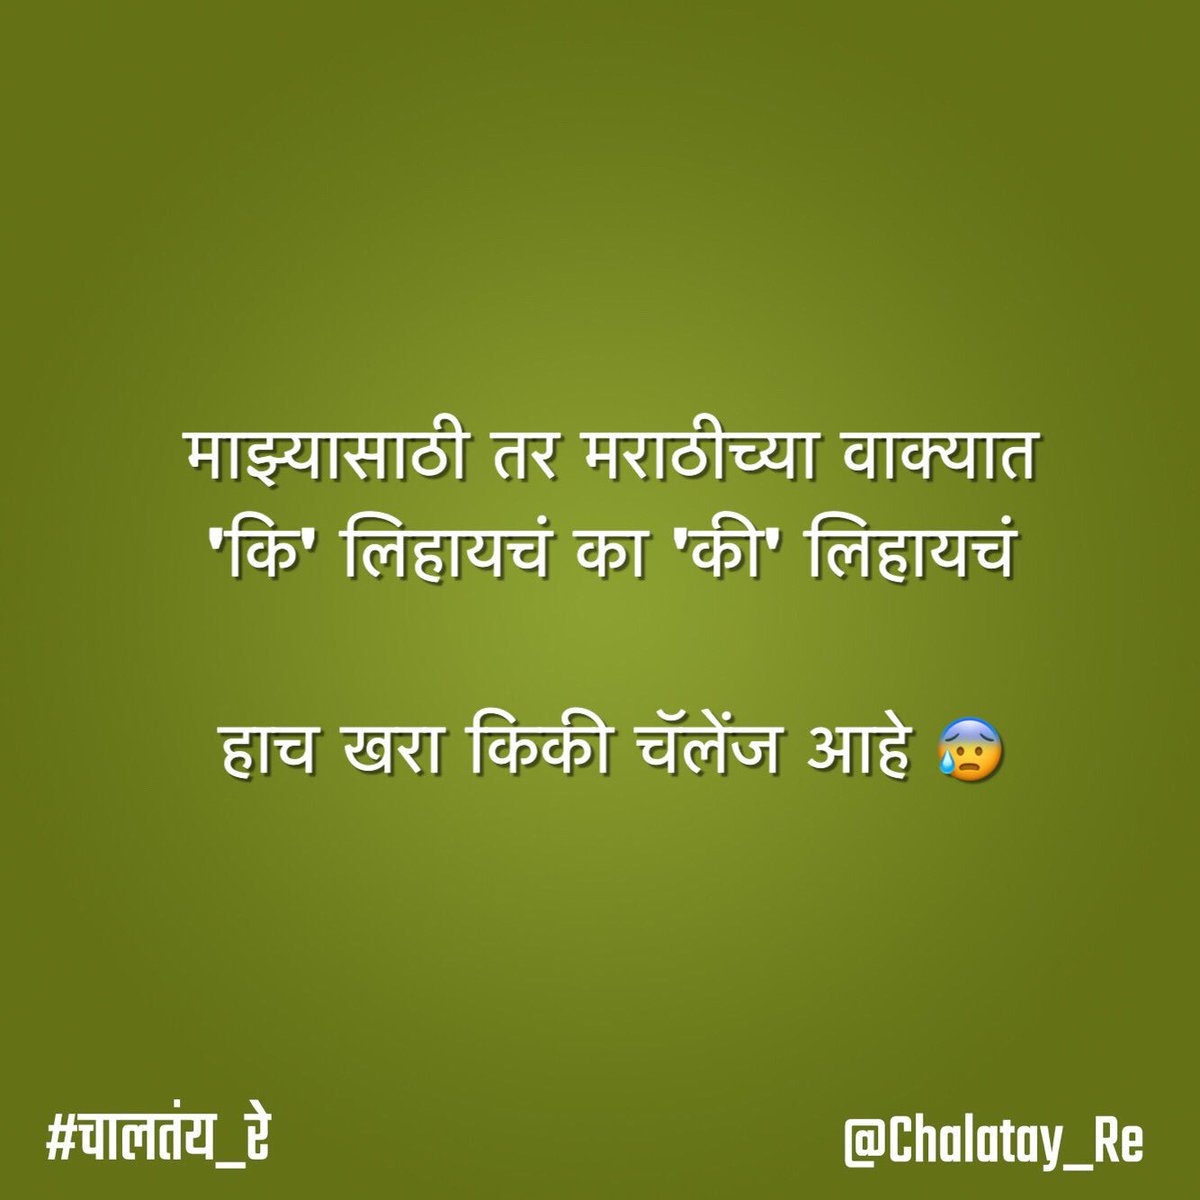 एक विद्यार्थी ( सेमी इंग्लिश मेडीयम )
#kikichallenge #kikichallange #semienglishmedium #kikidoyouloveme #kikidoyoulovemechallenge #nustarada #instamood #marathi #Chalatay_Re #चालतंय_रे  #ChalatayRe #चालतंयरे  #Pune #Friends #FriendsForever #marathifun #marathistatus